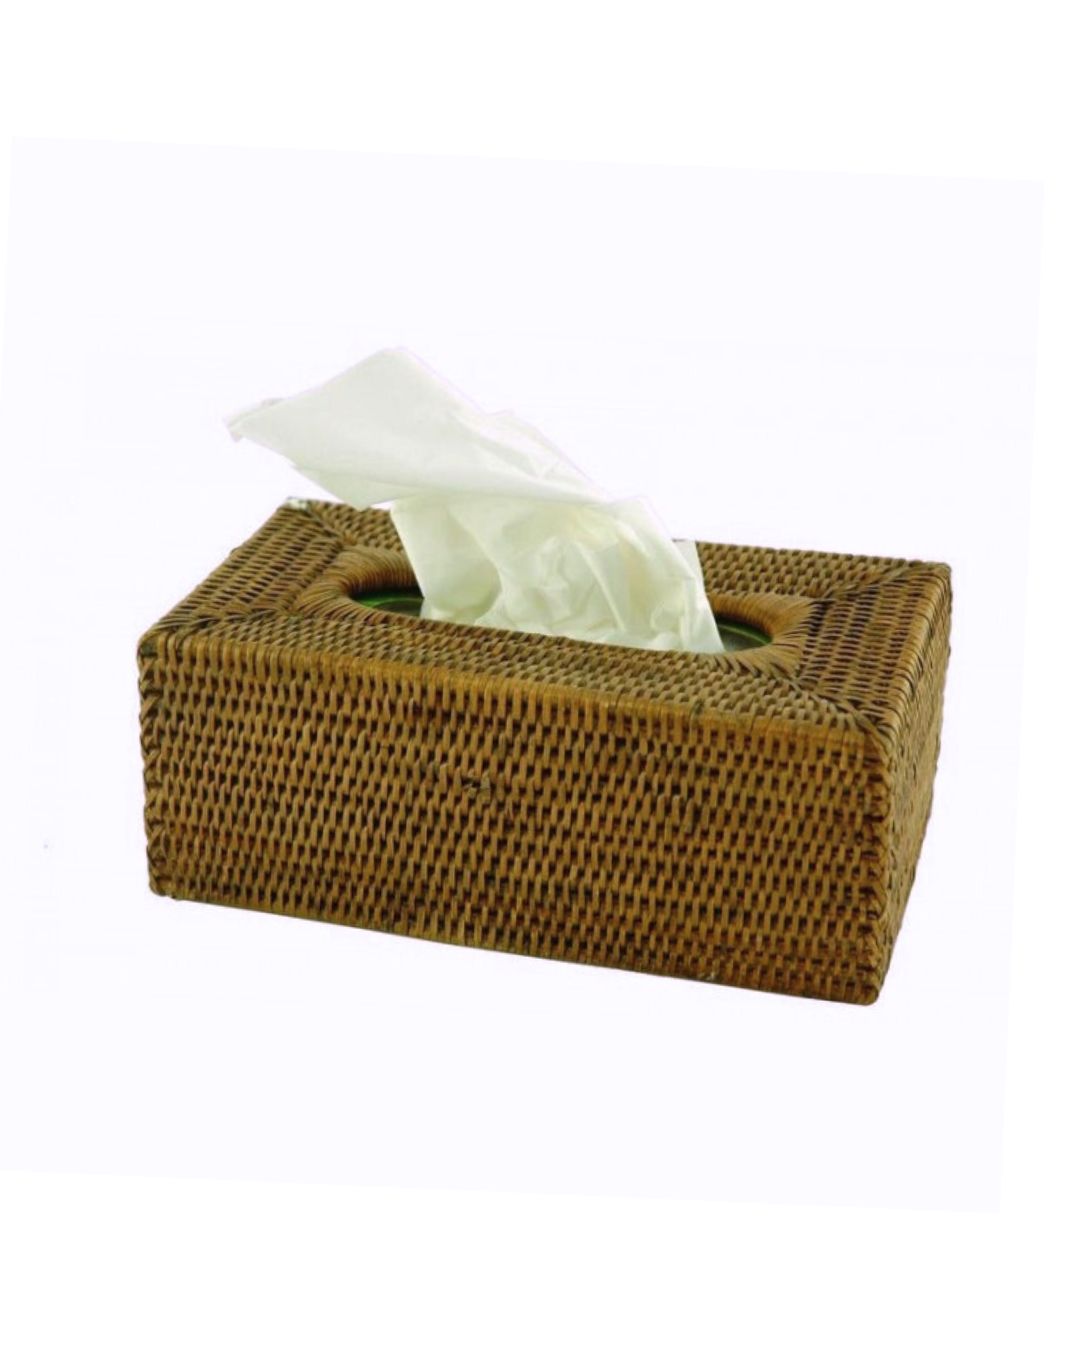 Rattan Tissue Box - Natural